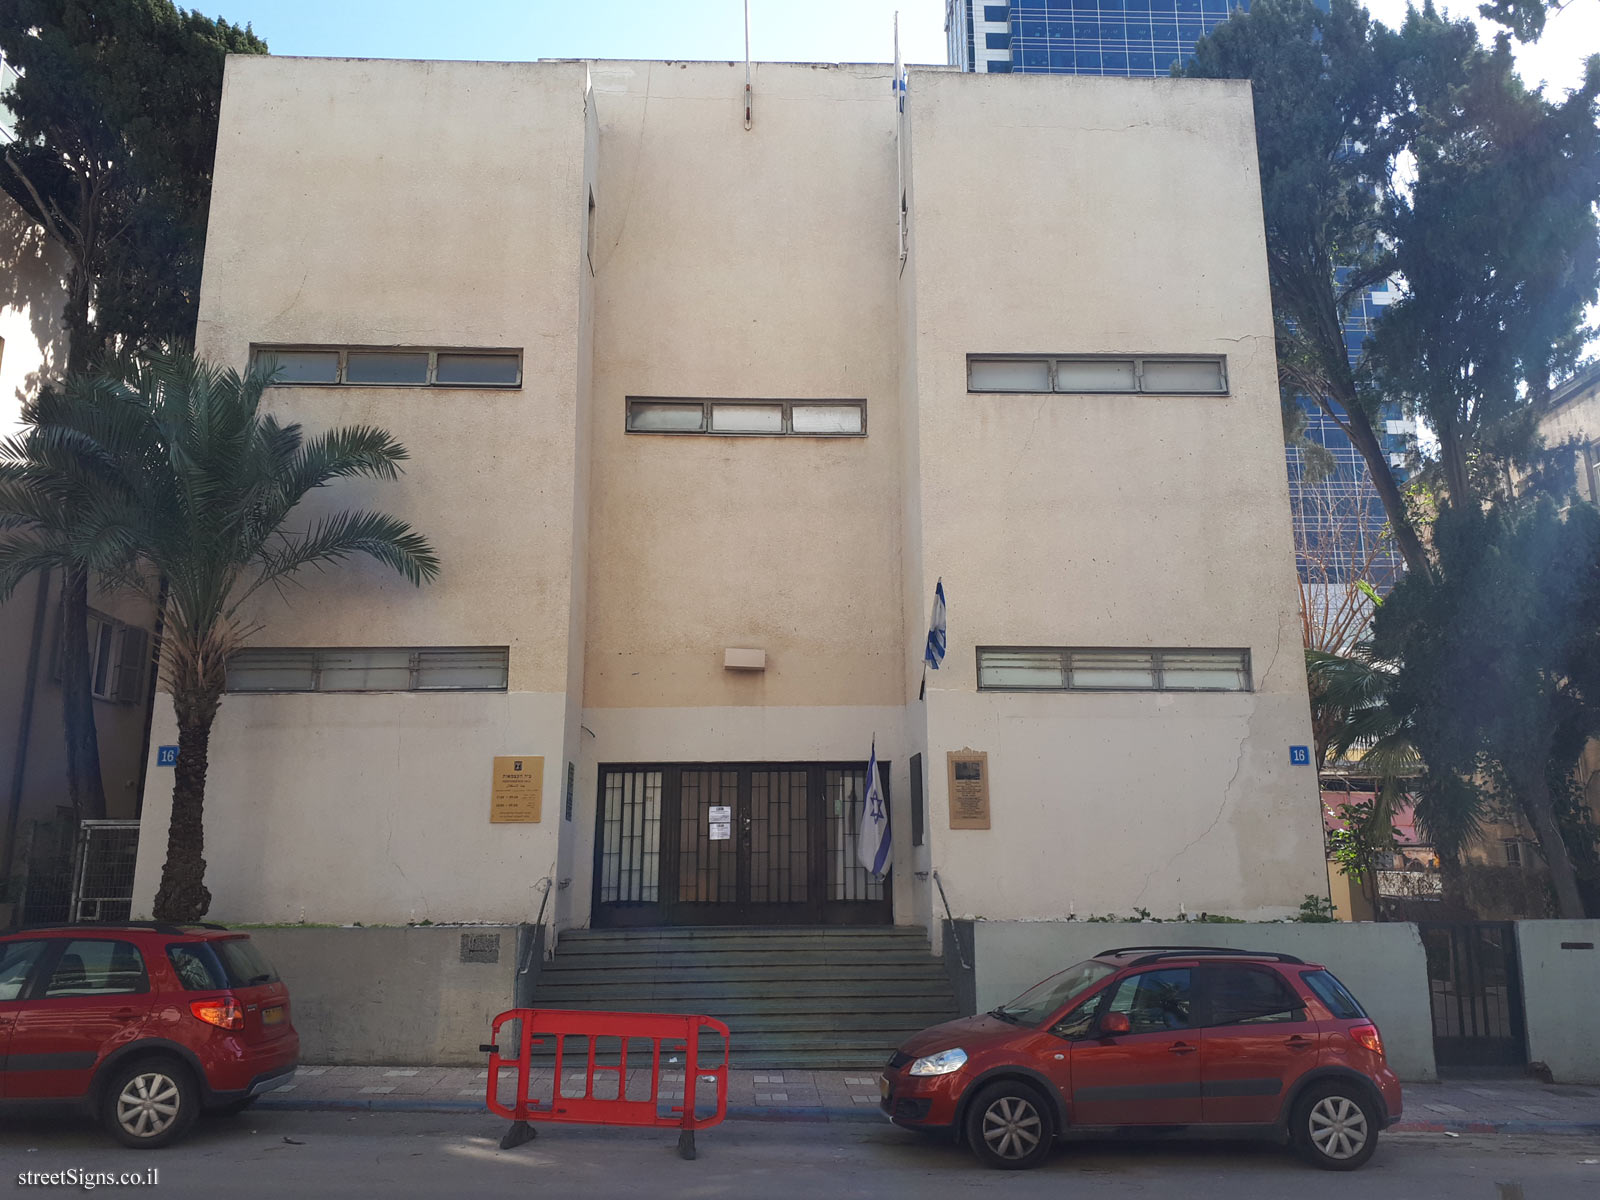 Meir and Zina Dizengoff - The houses of the founders of Tel Aviv - Rothschild Blvd 16, Tel Aviv-Yafo